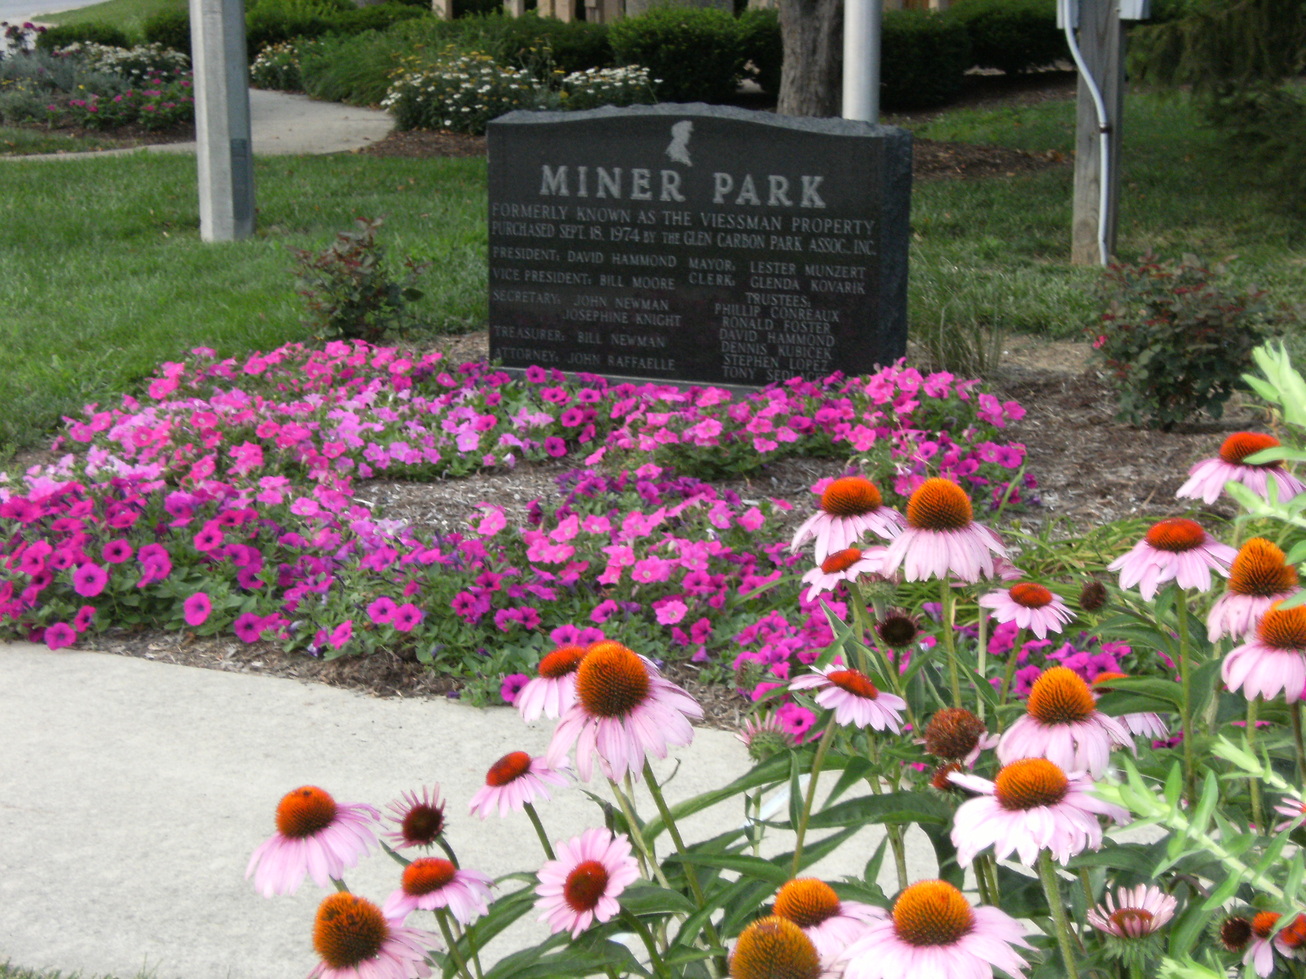 Glen Carbon, IL: Miner Park in Glen Carbon, Illinois